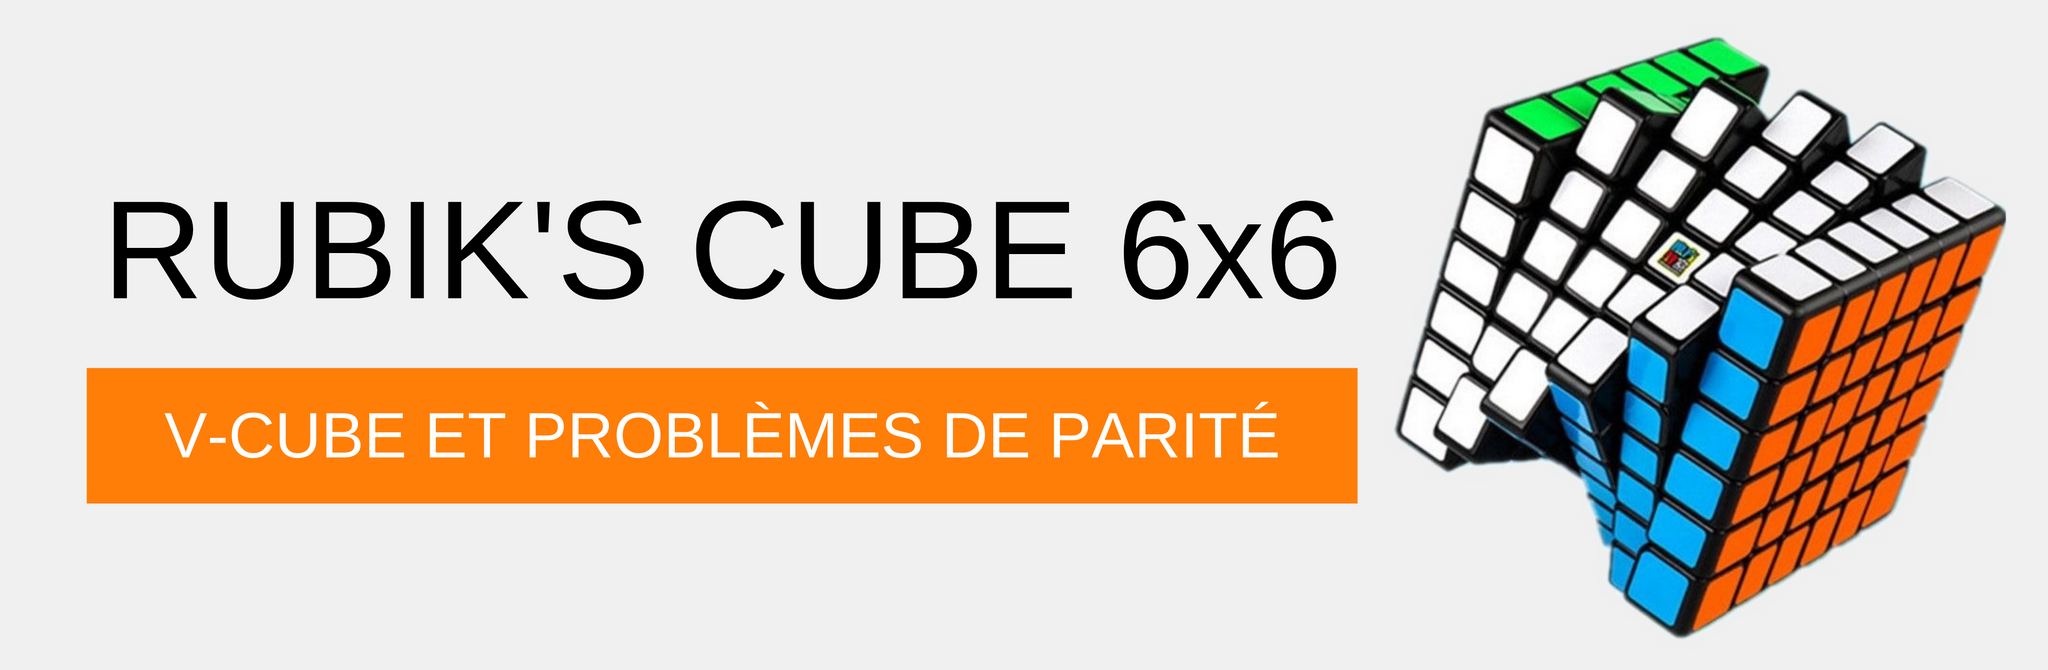 rubik's cube 6x6x6